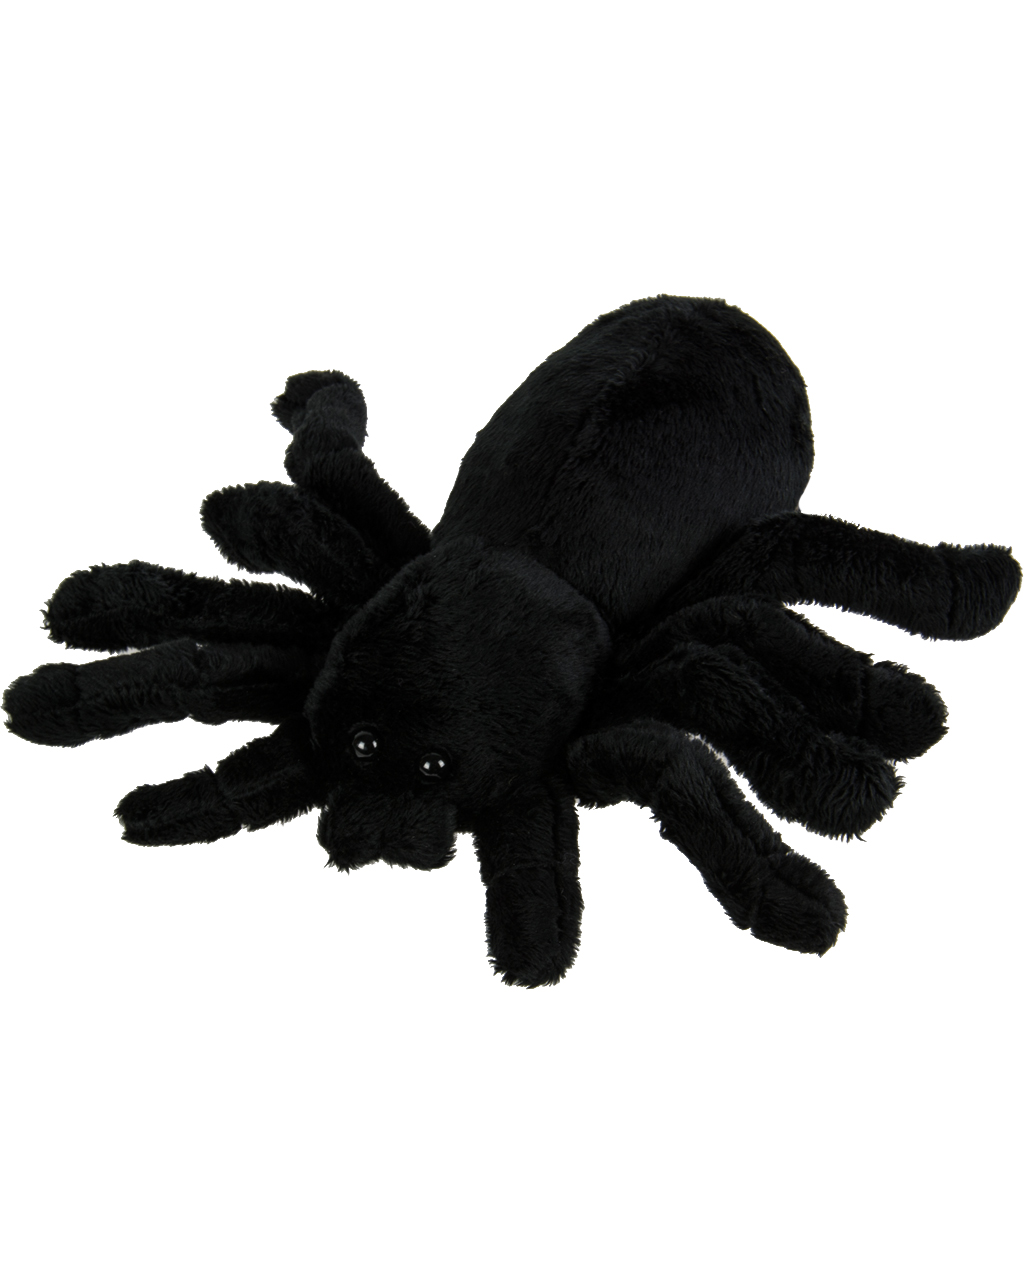 LED Riesen Spinne Tarantula Plüsch Schwarz Halloween Deko Geisterhaus Horror DHL 